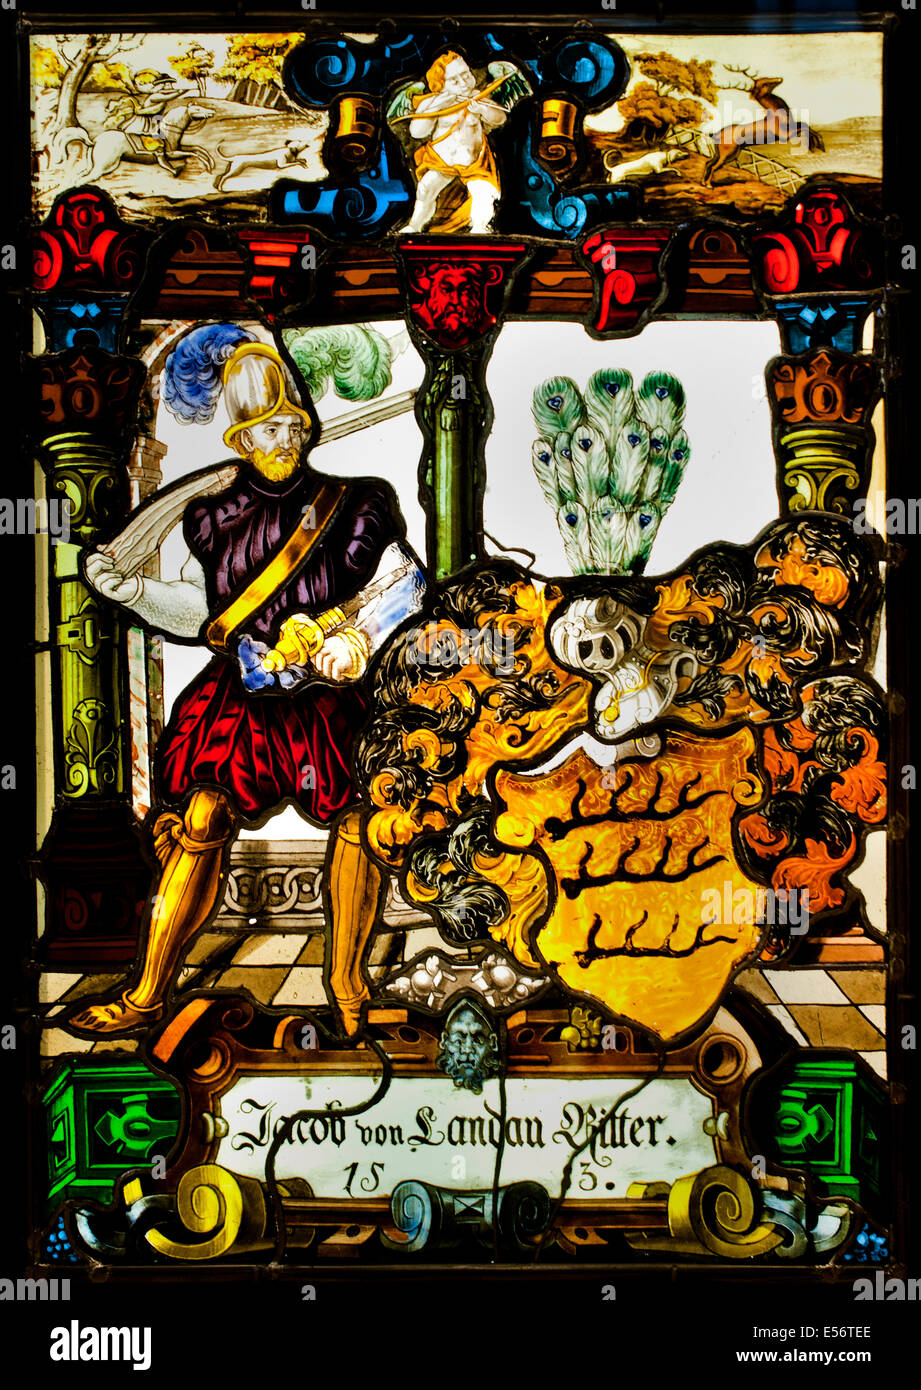 Coat of arms  leaded window Jacob von Landau Ritter 1513 German Germany Stock Photo